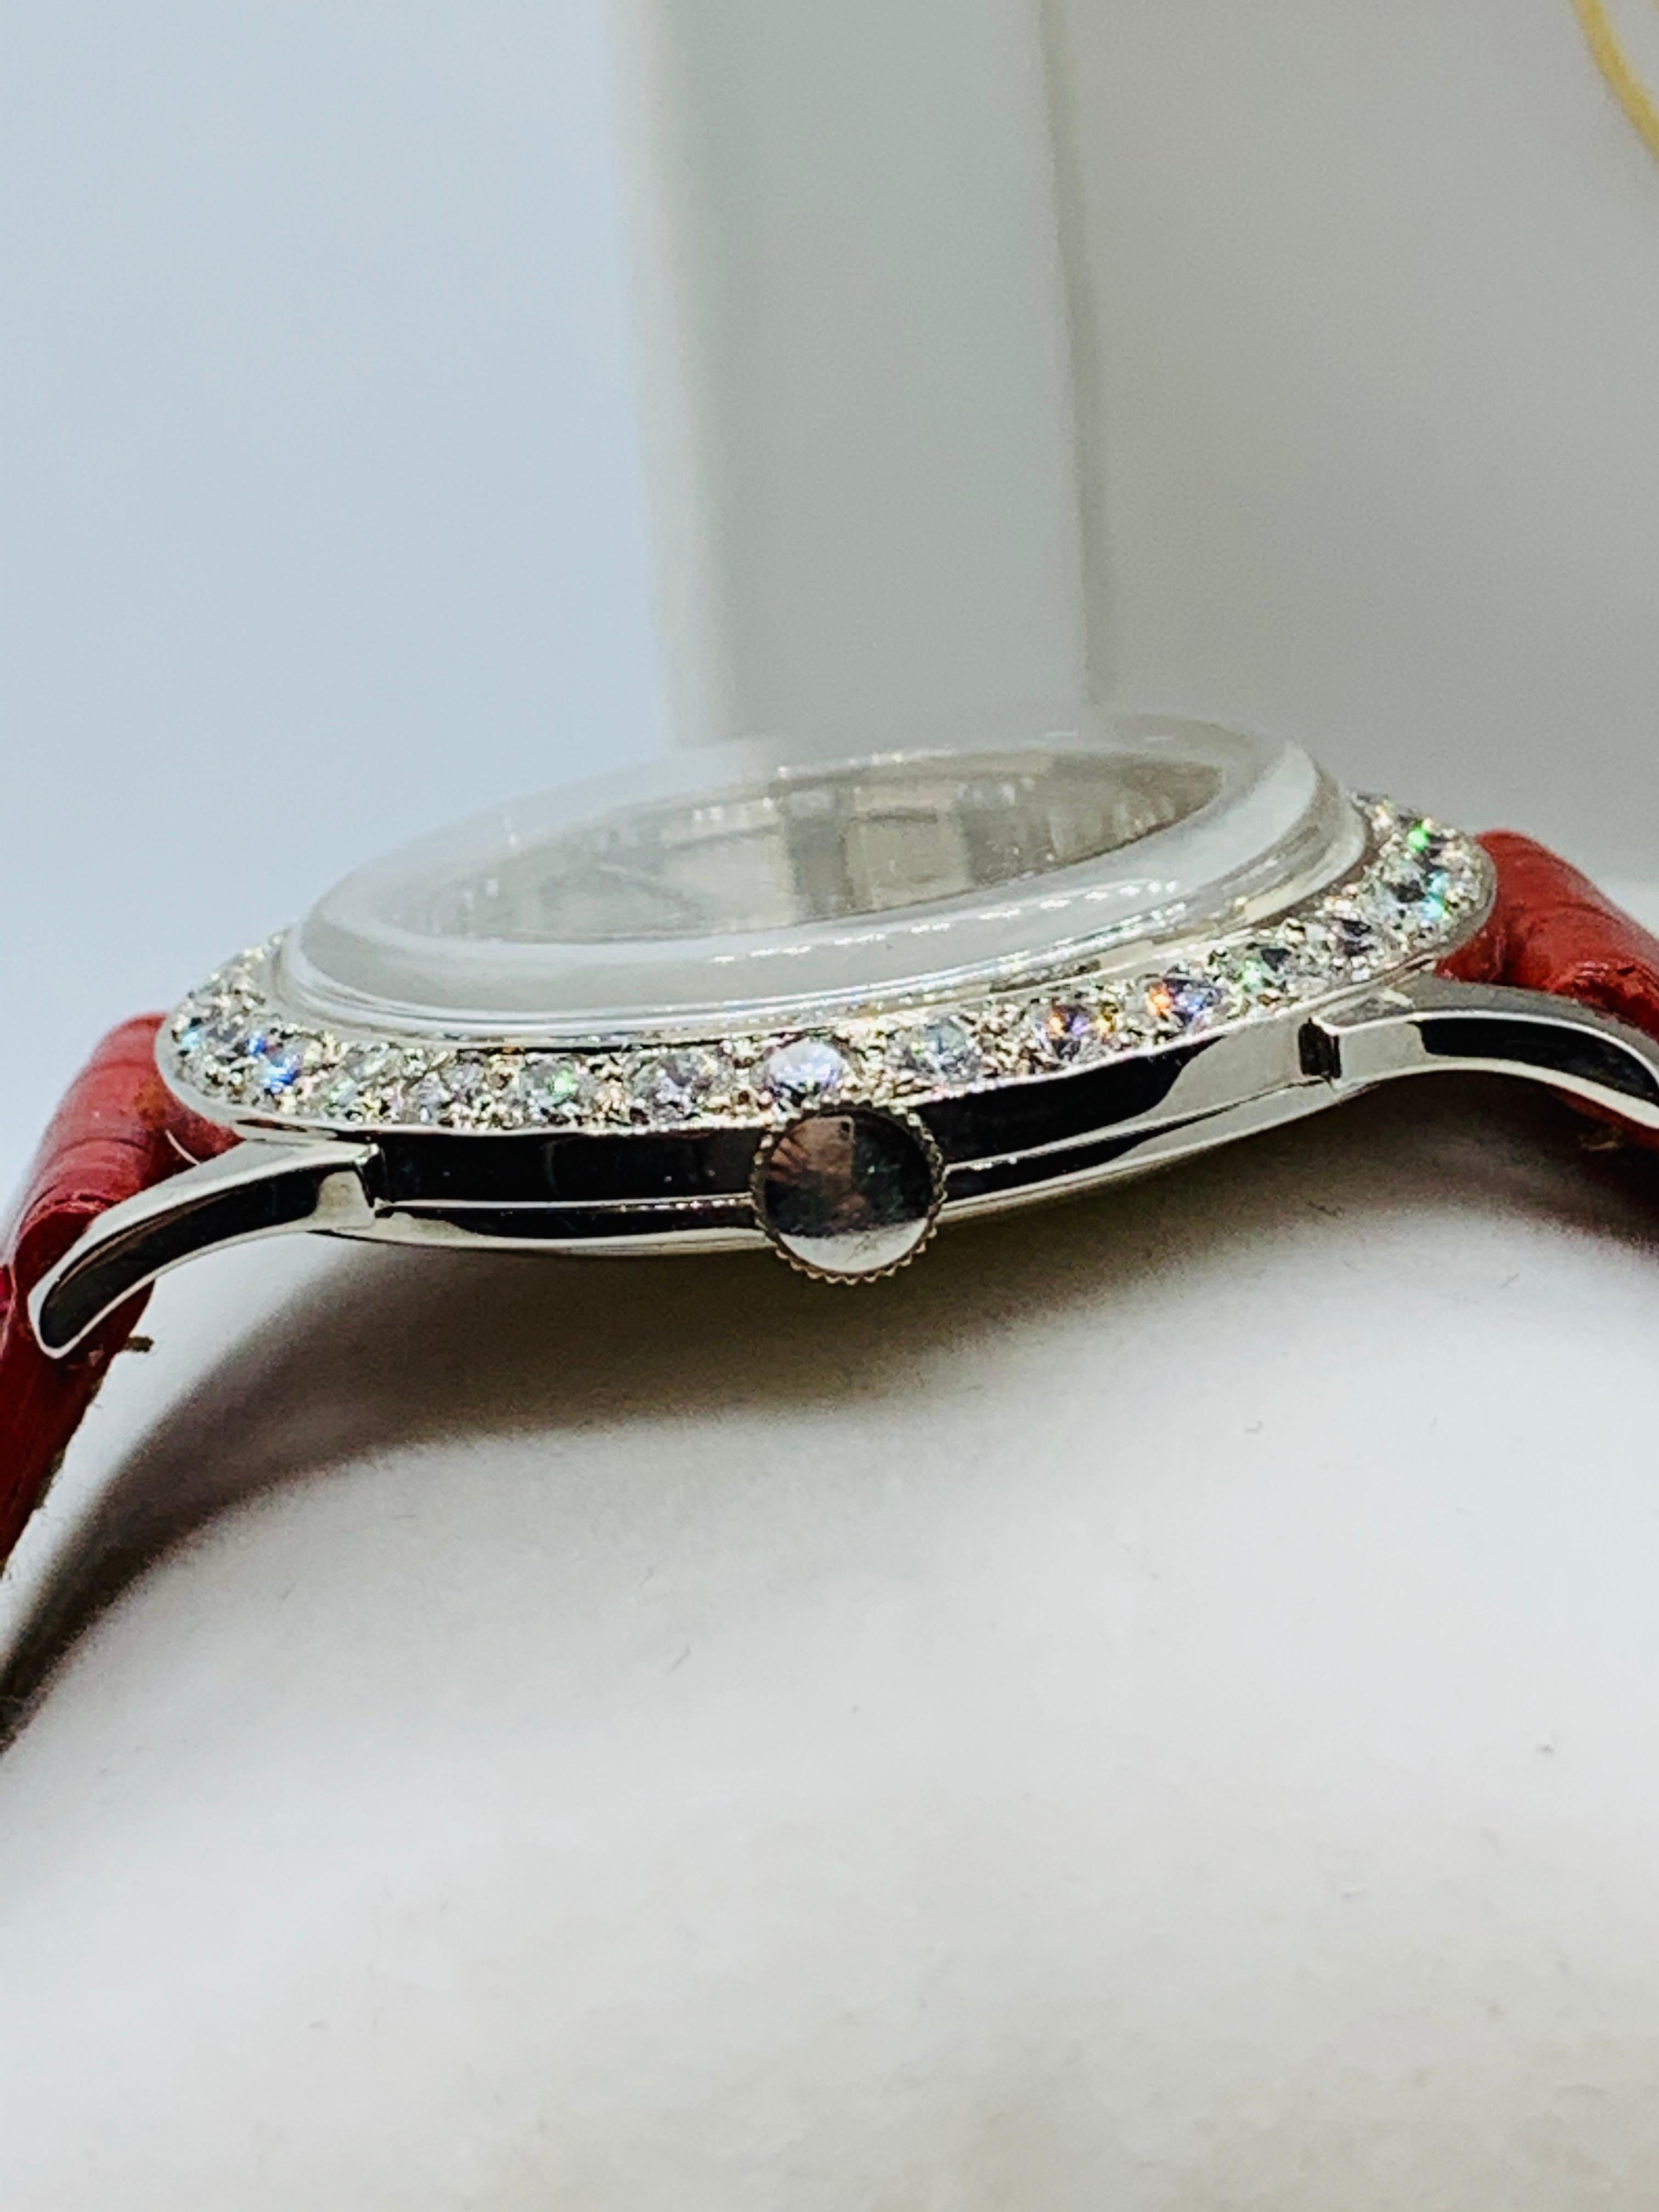 paul breguette watch price